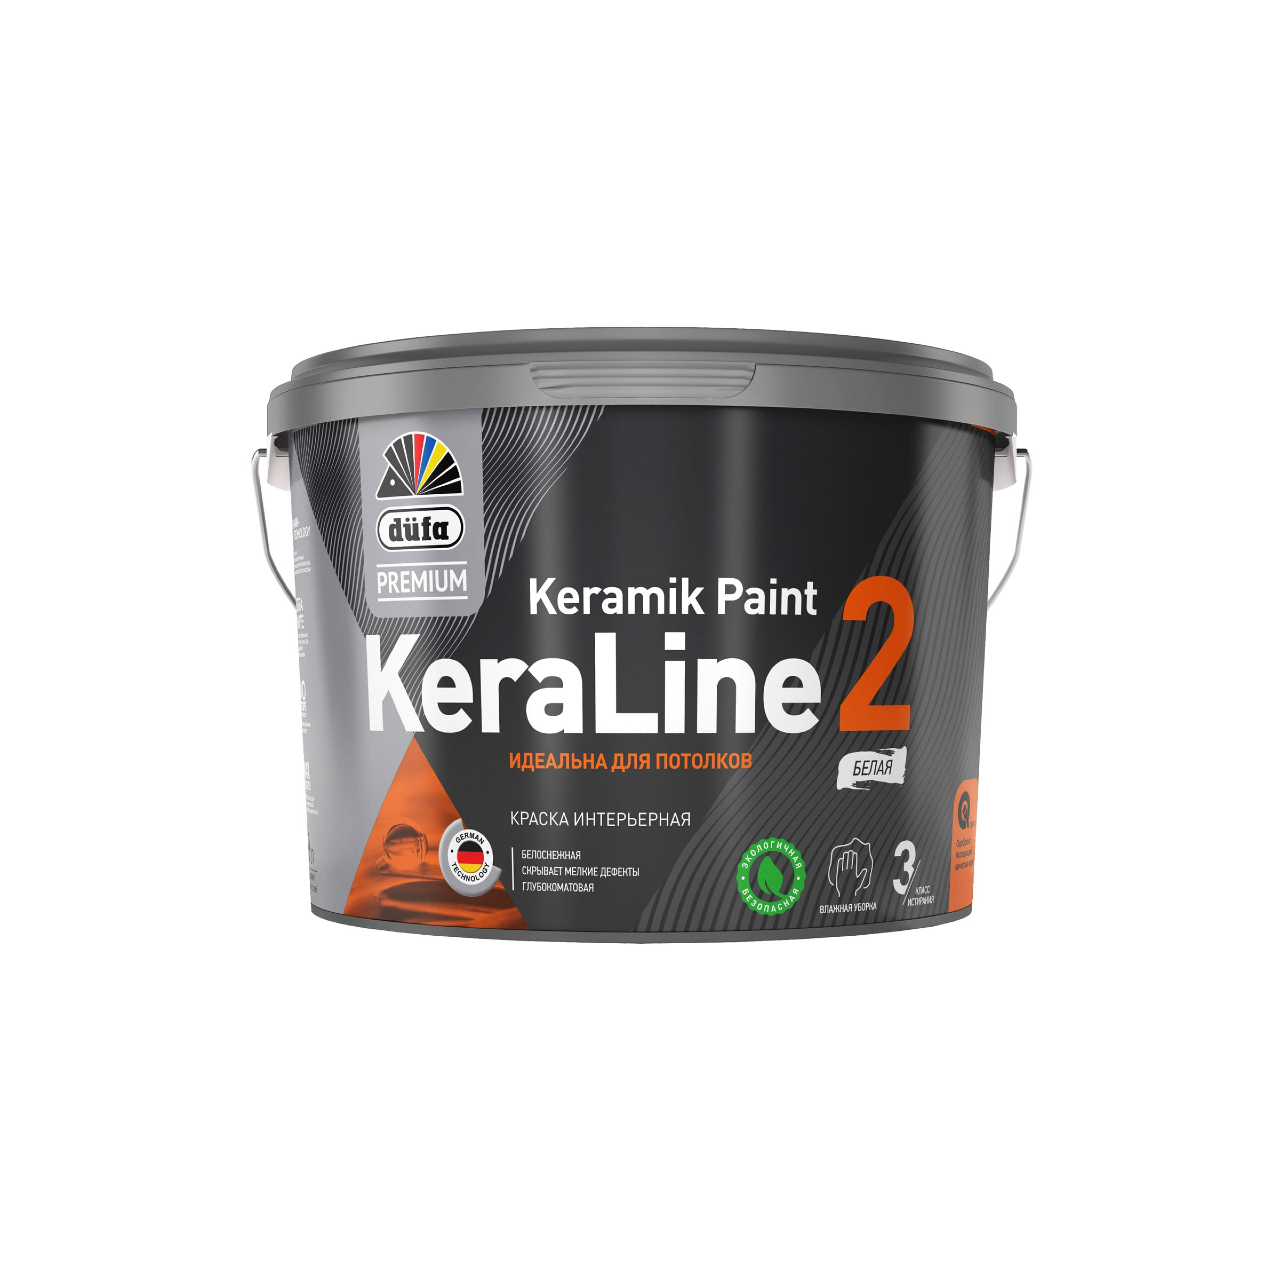 90190631 Краска для потолков Premium KeraLine Keramik Paint 2 глубокоматовая белая база 1 9 л STLM-0126778 DUFA